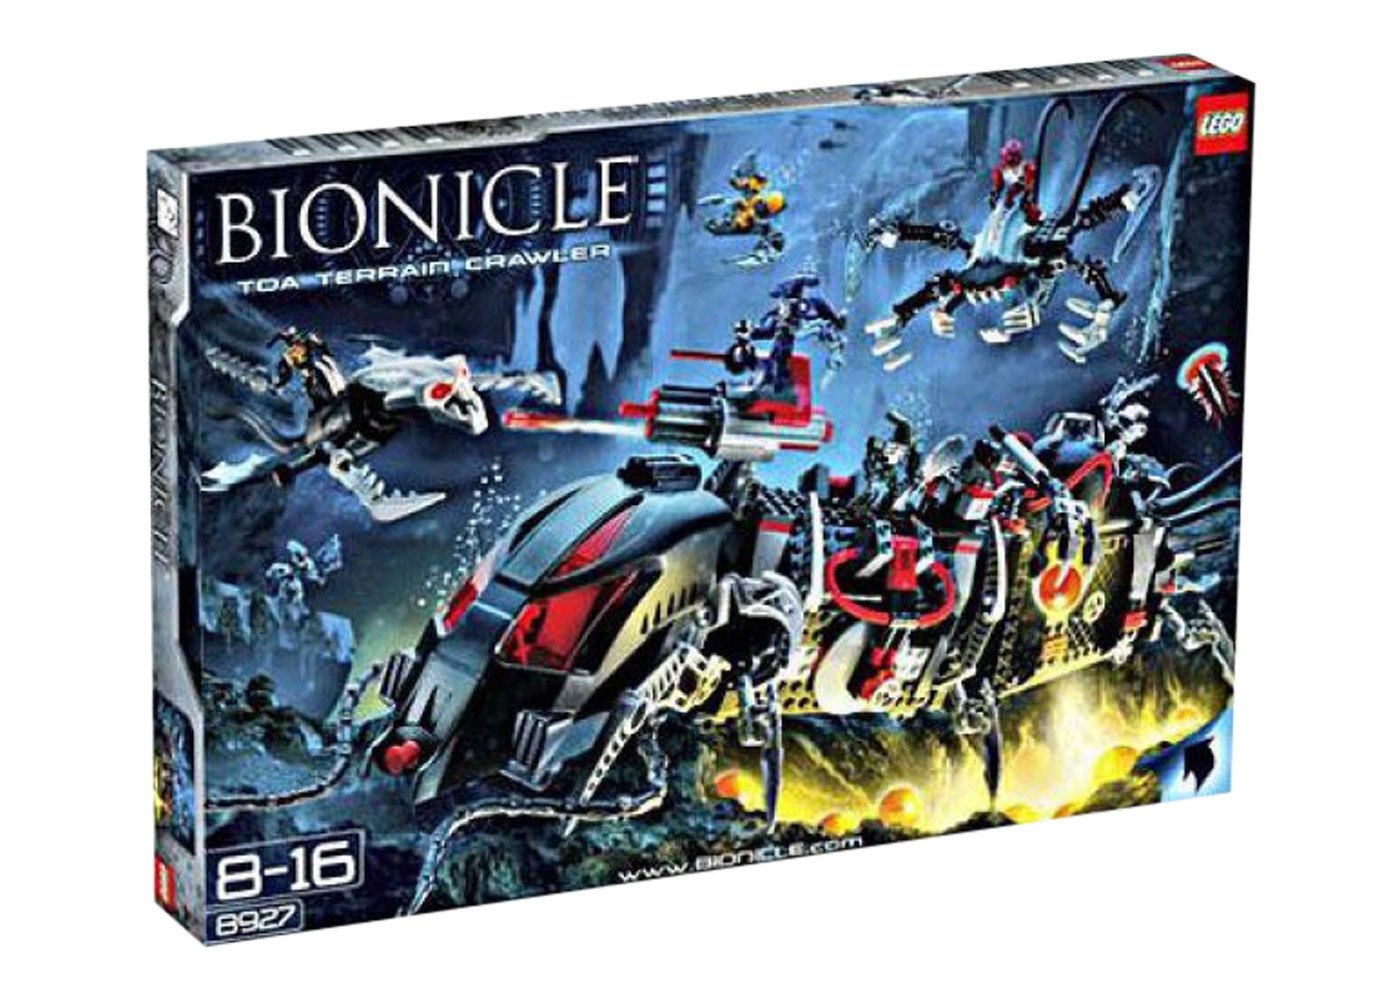 LEGO Bionicle Terrain Crawler Set 8927 - US